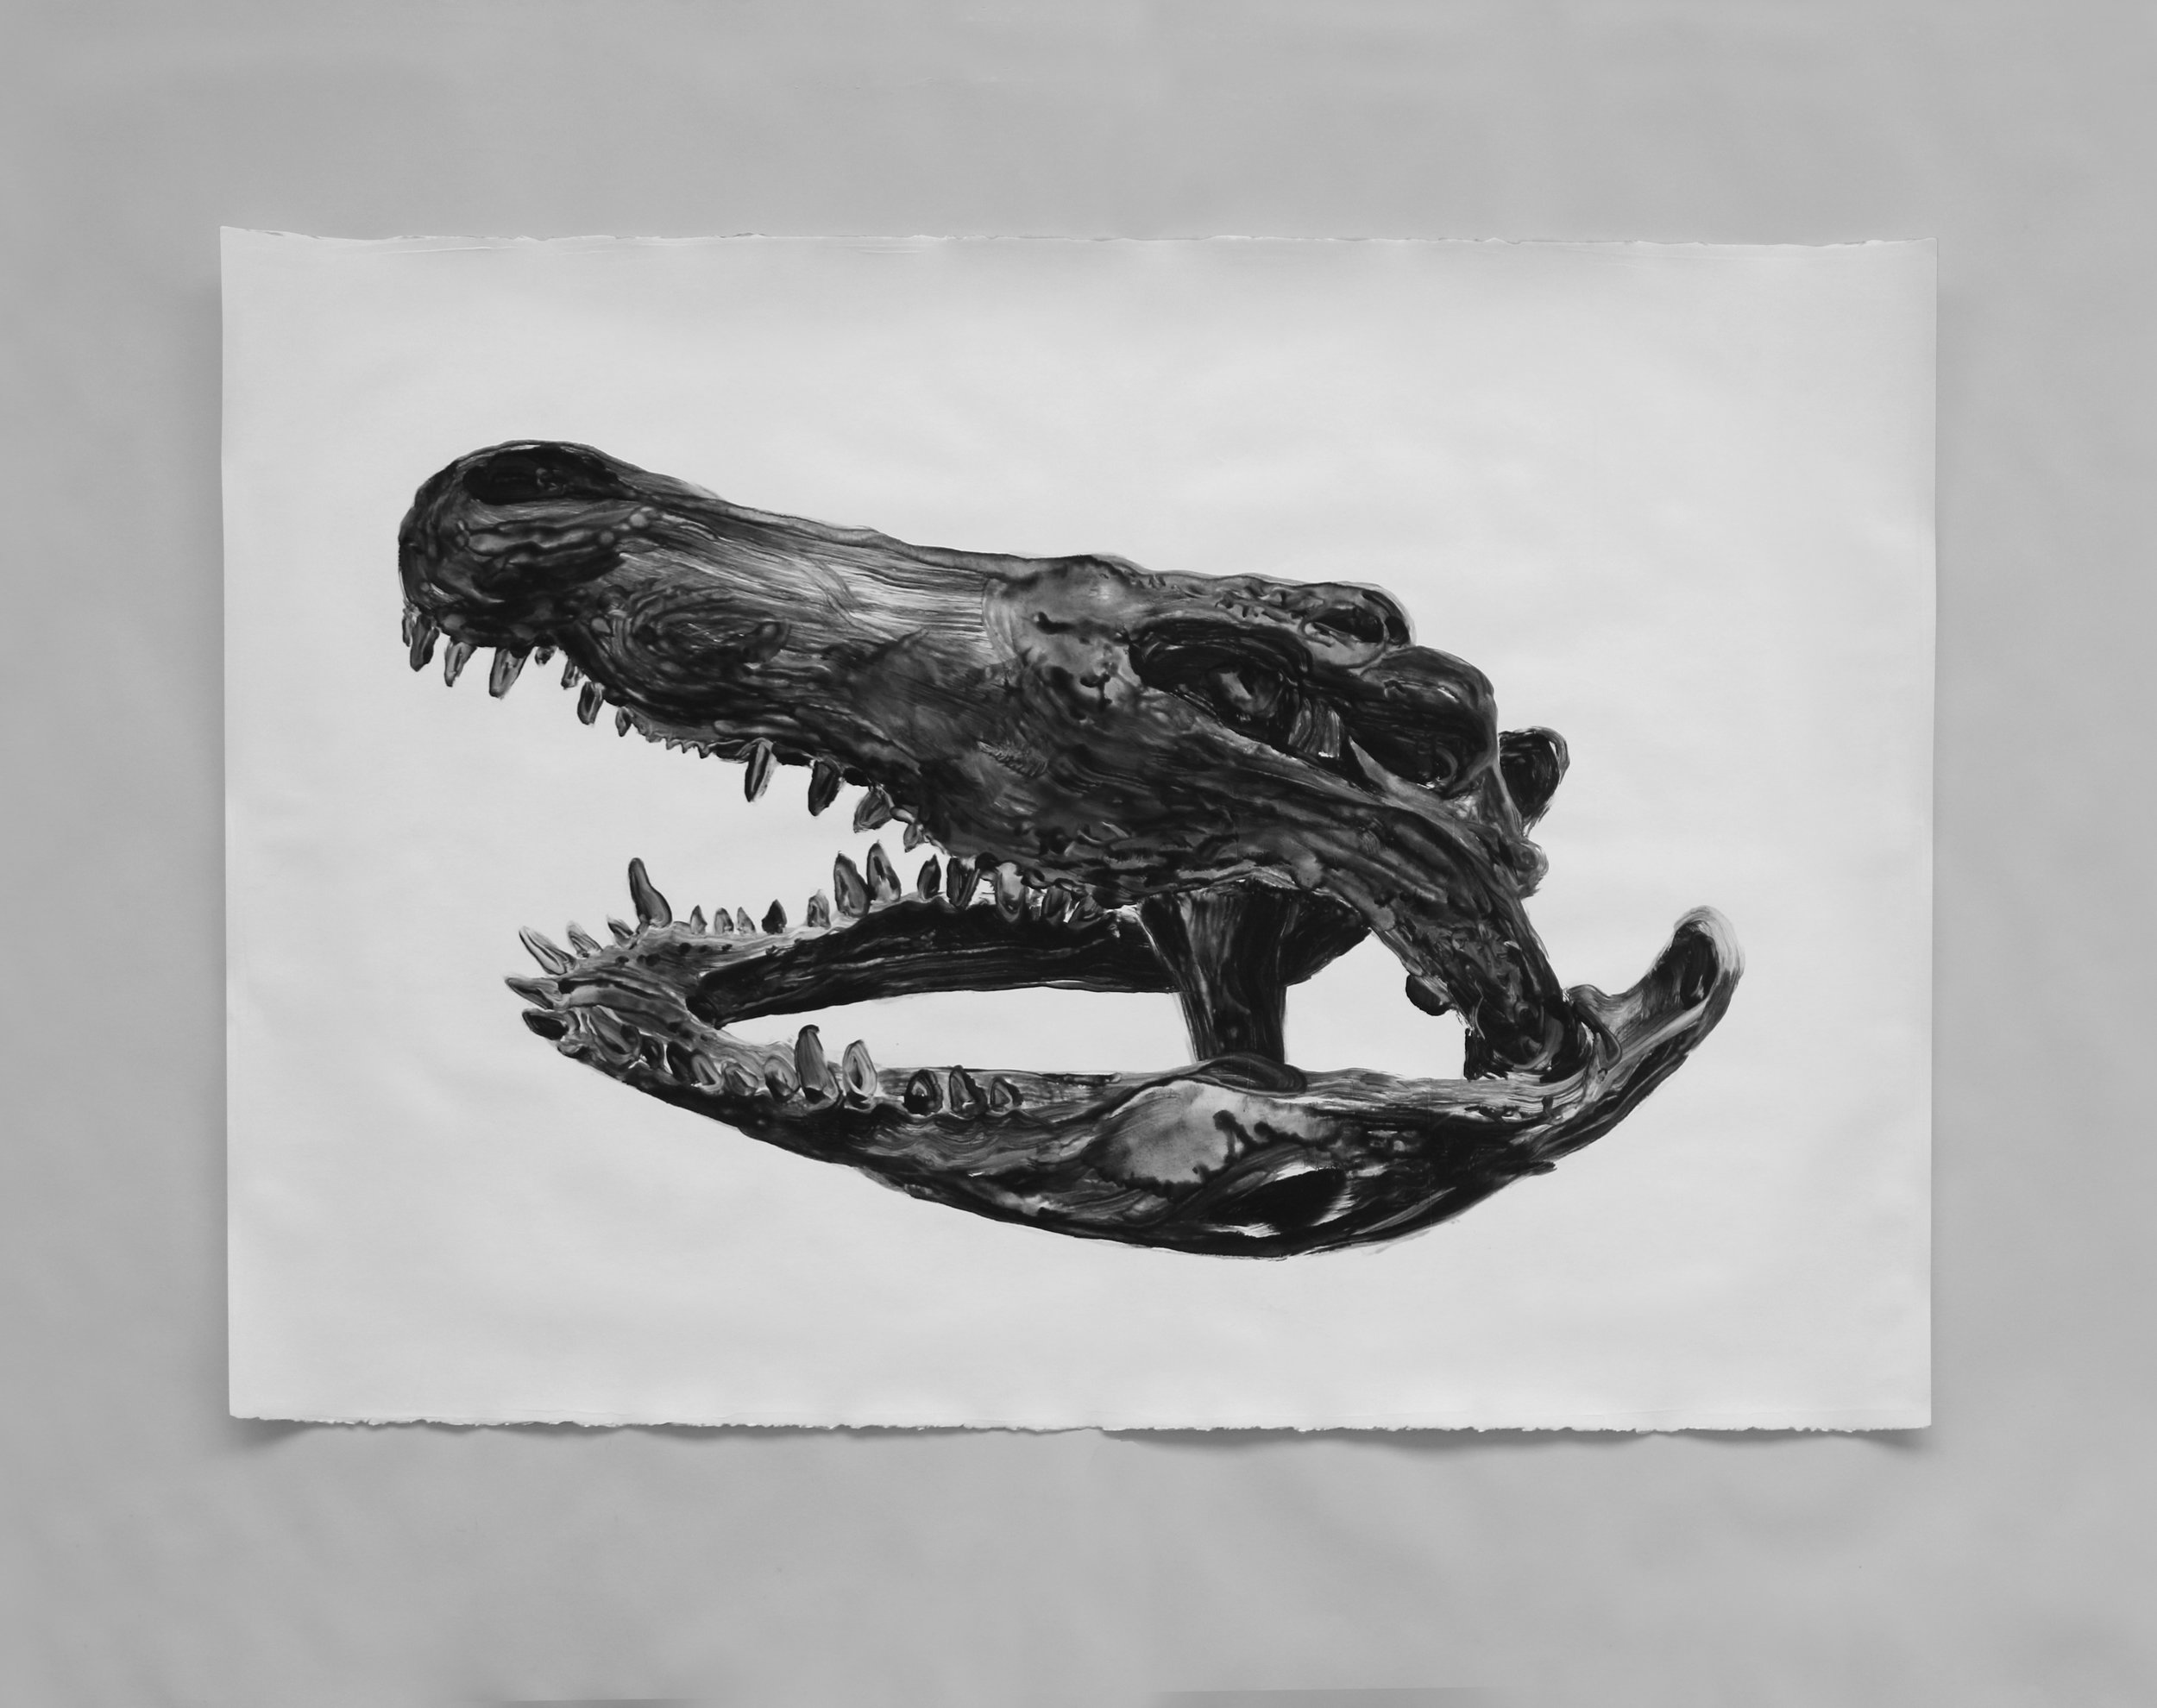  Crâne de crocodile / Crocodile skull  Huile sur papier / Oil on paper  45 X 31 in /&nbsp;114 X 78 cm    